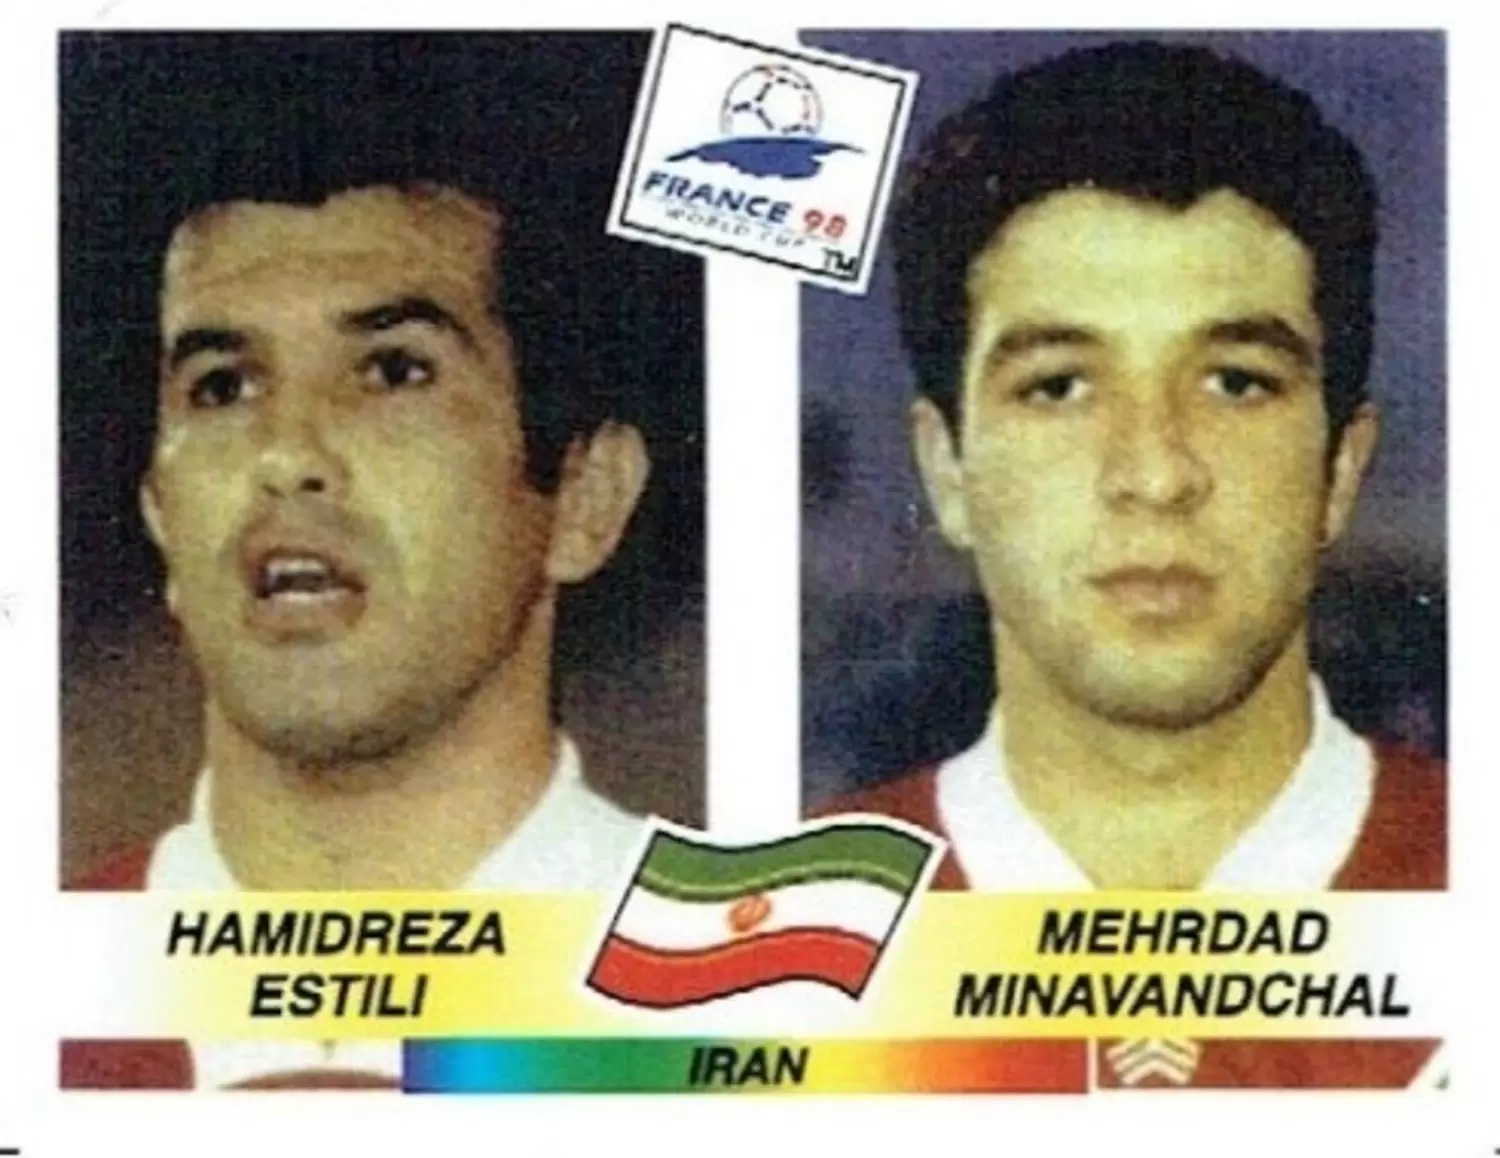 France 98 - Hamidreza Estili / Mehrdad Minvanchal - IRN